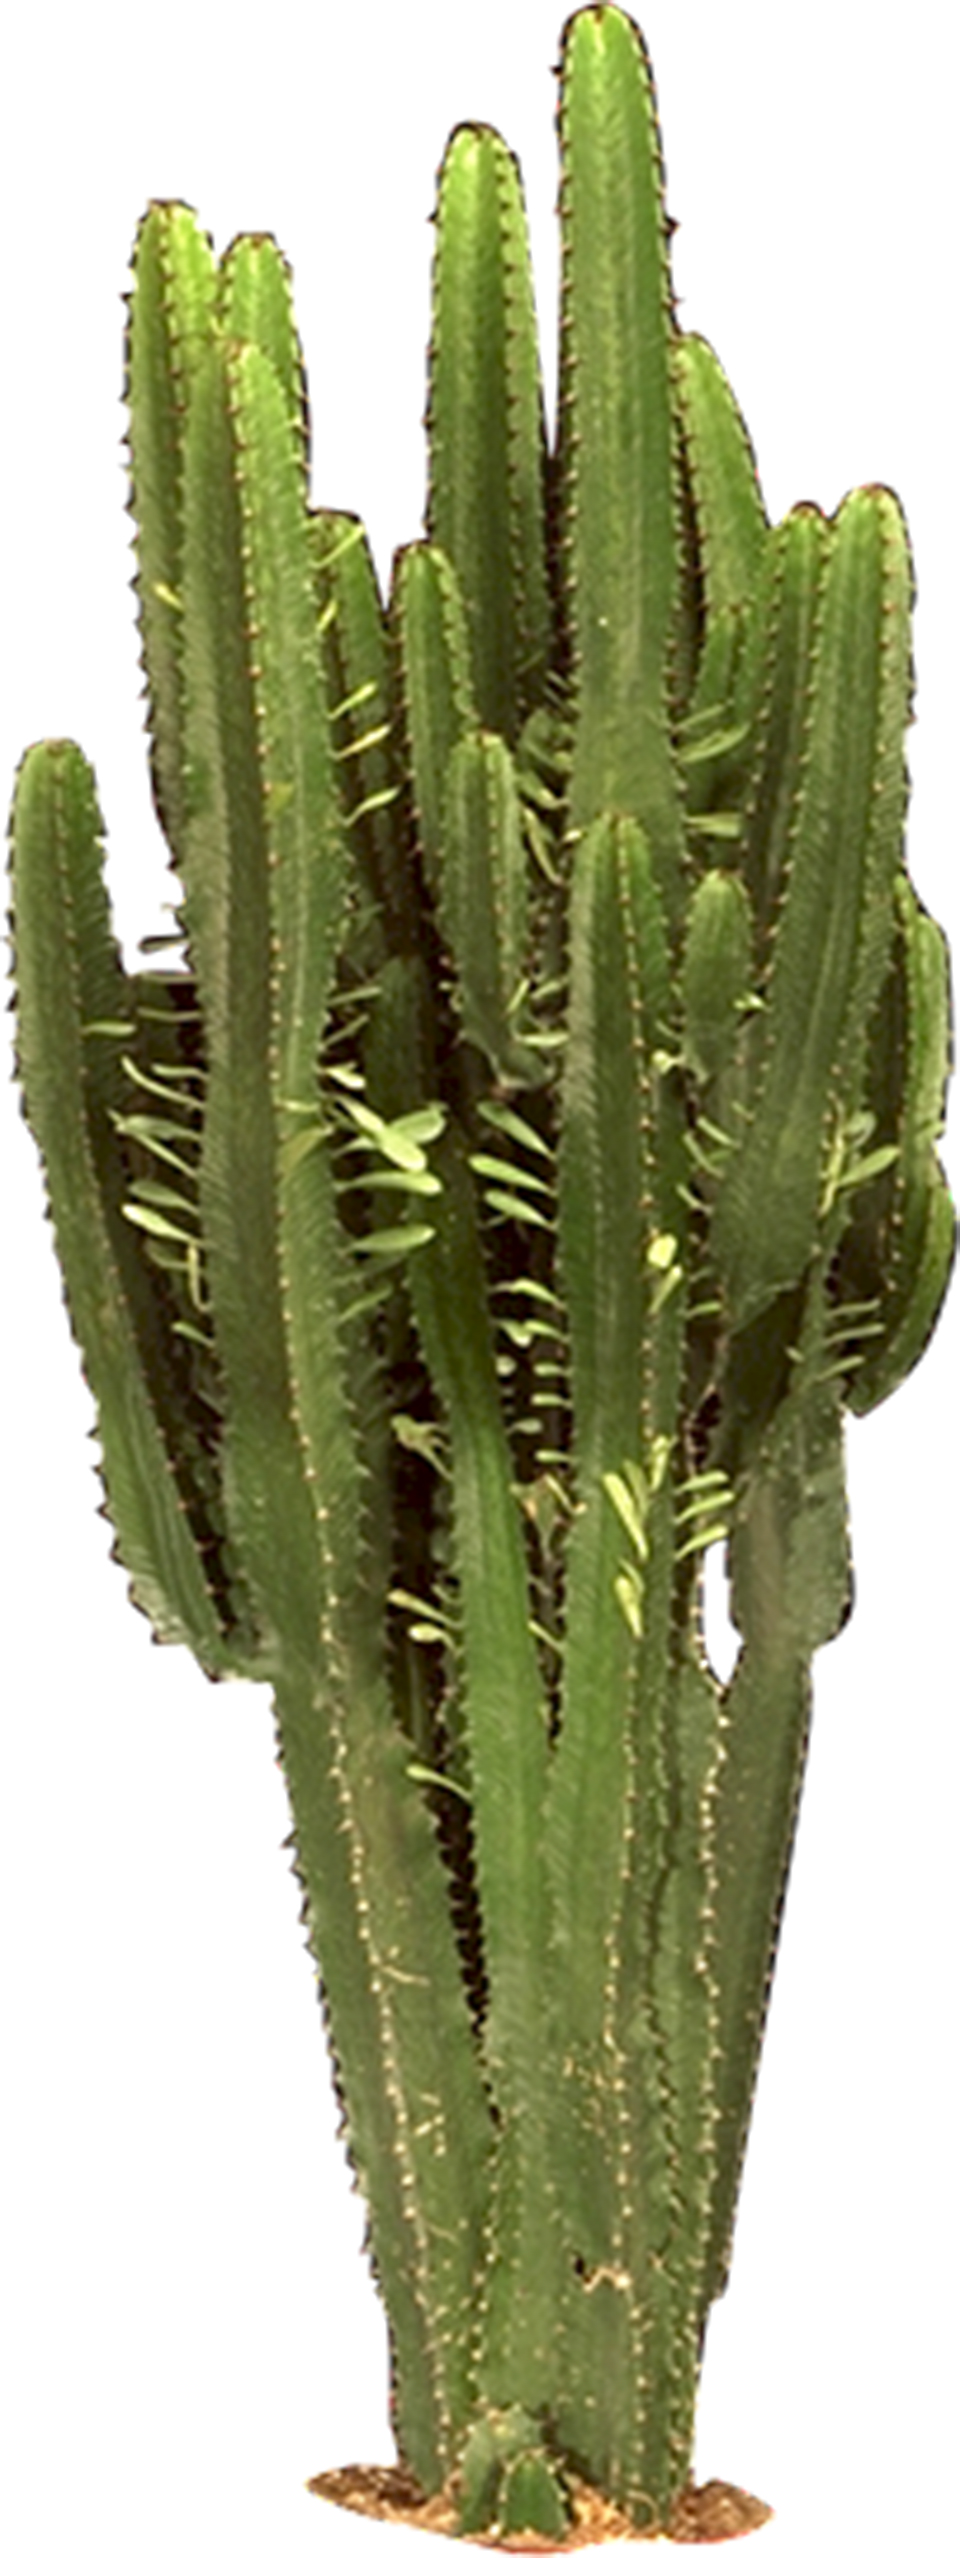 Cactus HD PNG Transparent Cactus HD.PNG Images..